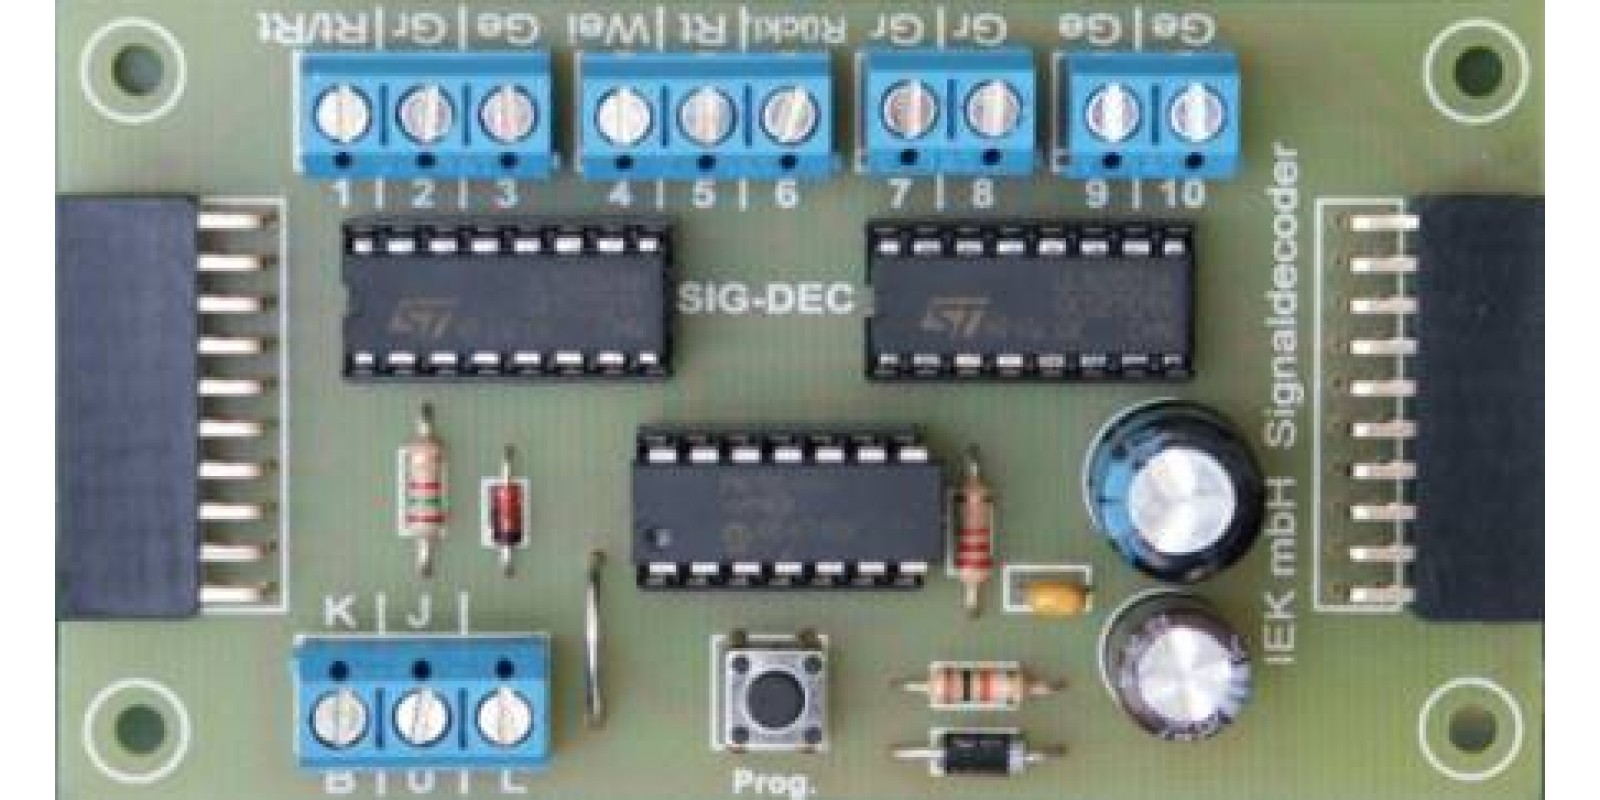 IEK040704-19 Digitaler Signaldecoder  SIG- DEC MM